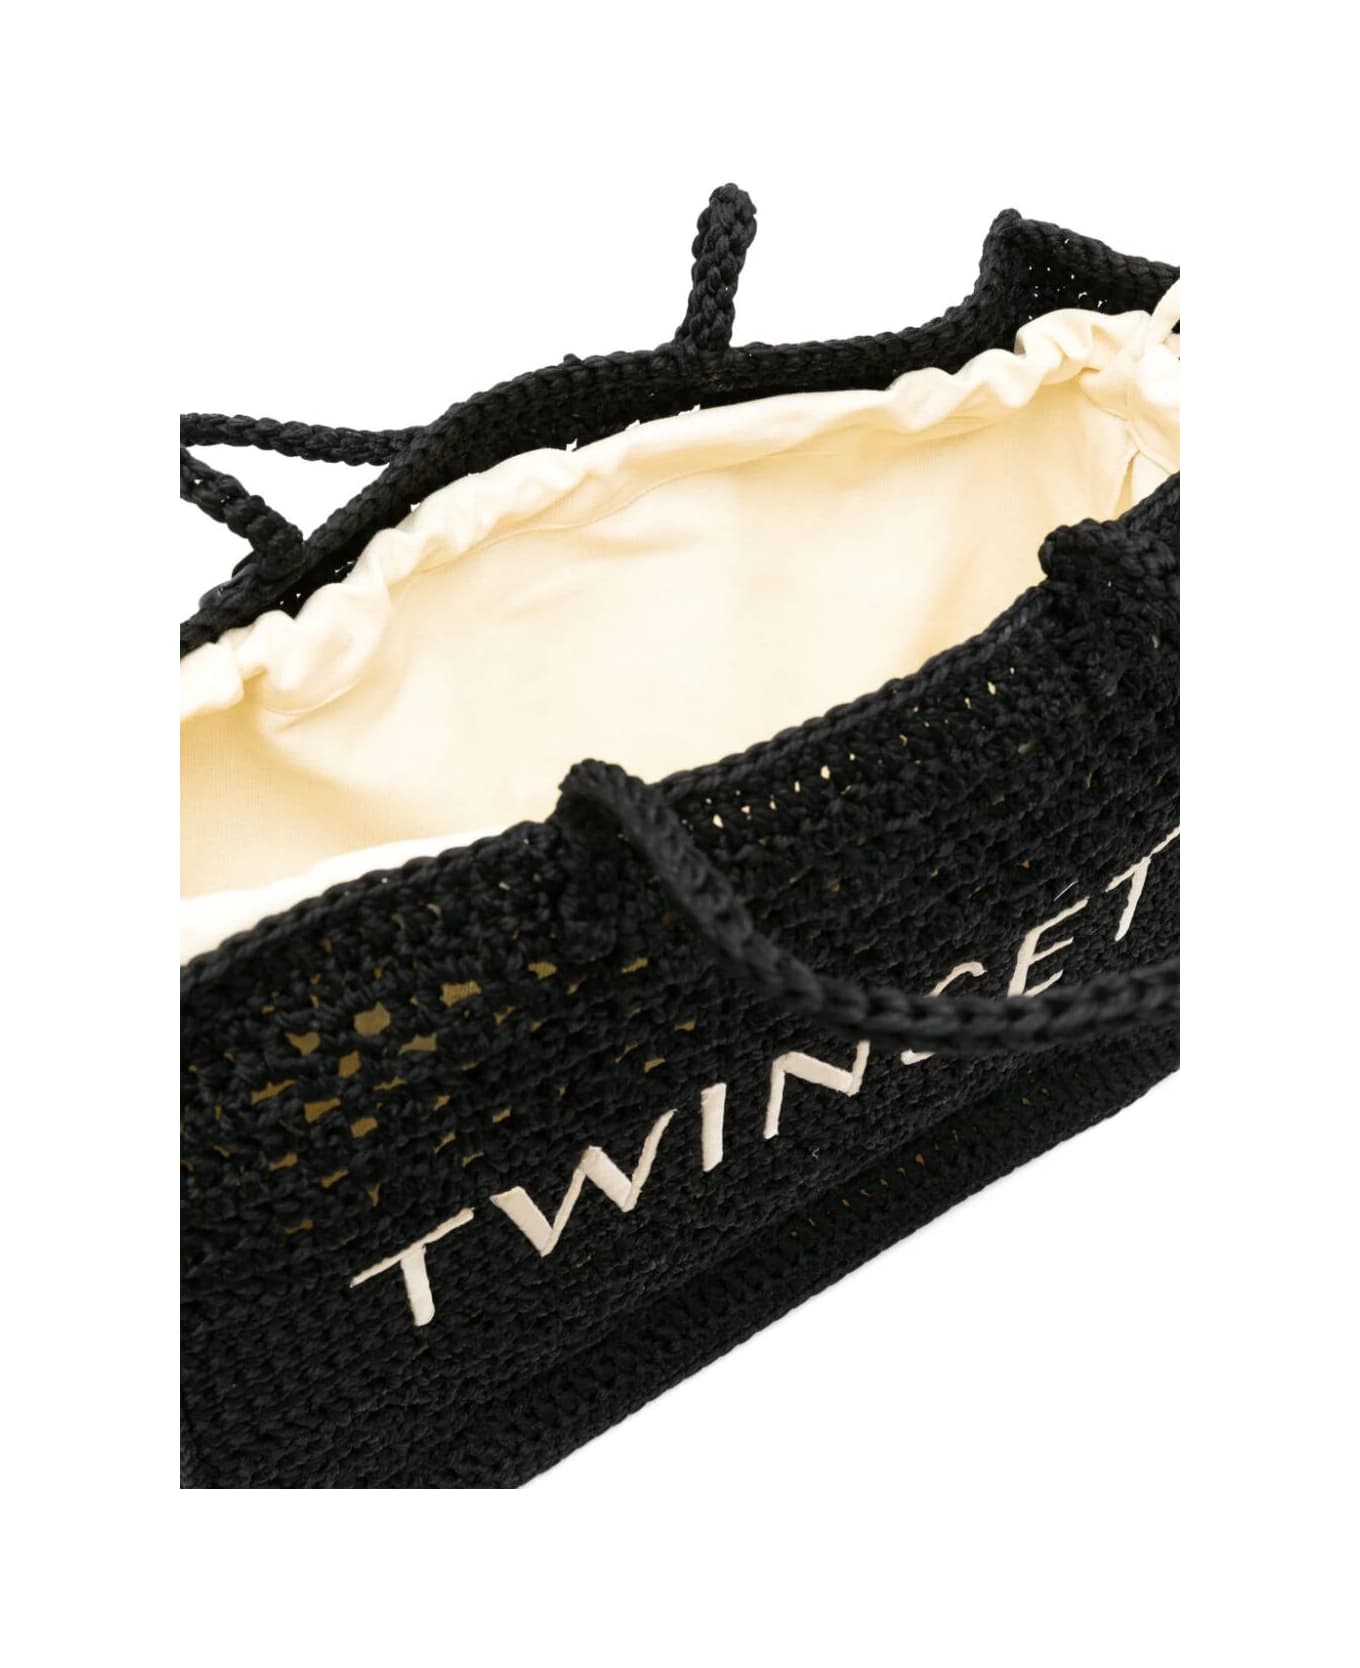 TwinSet Shopping Bag - Black